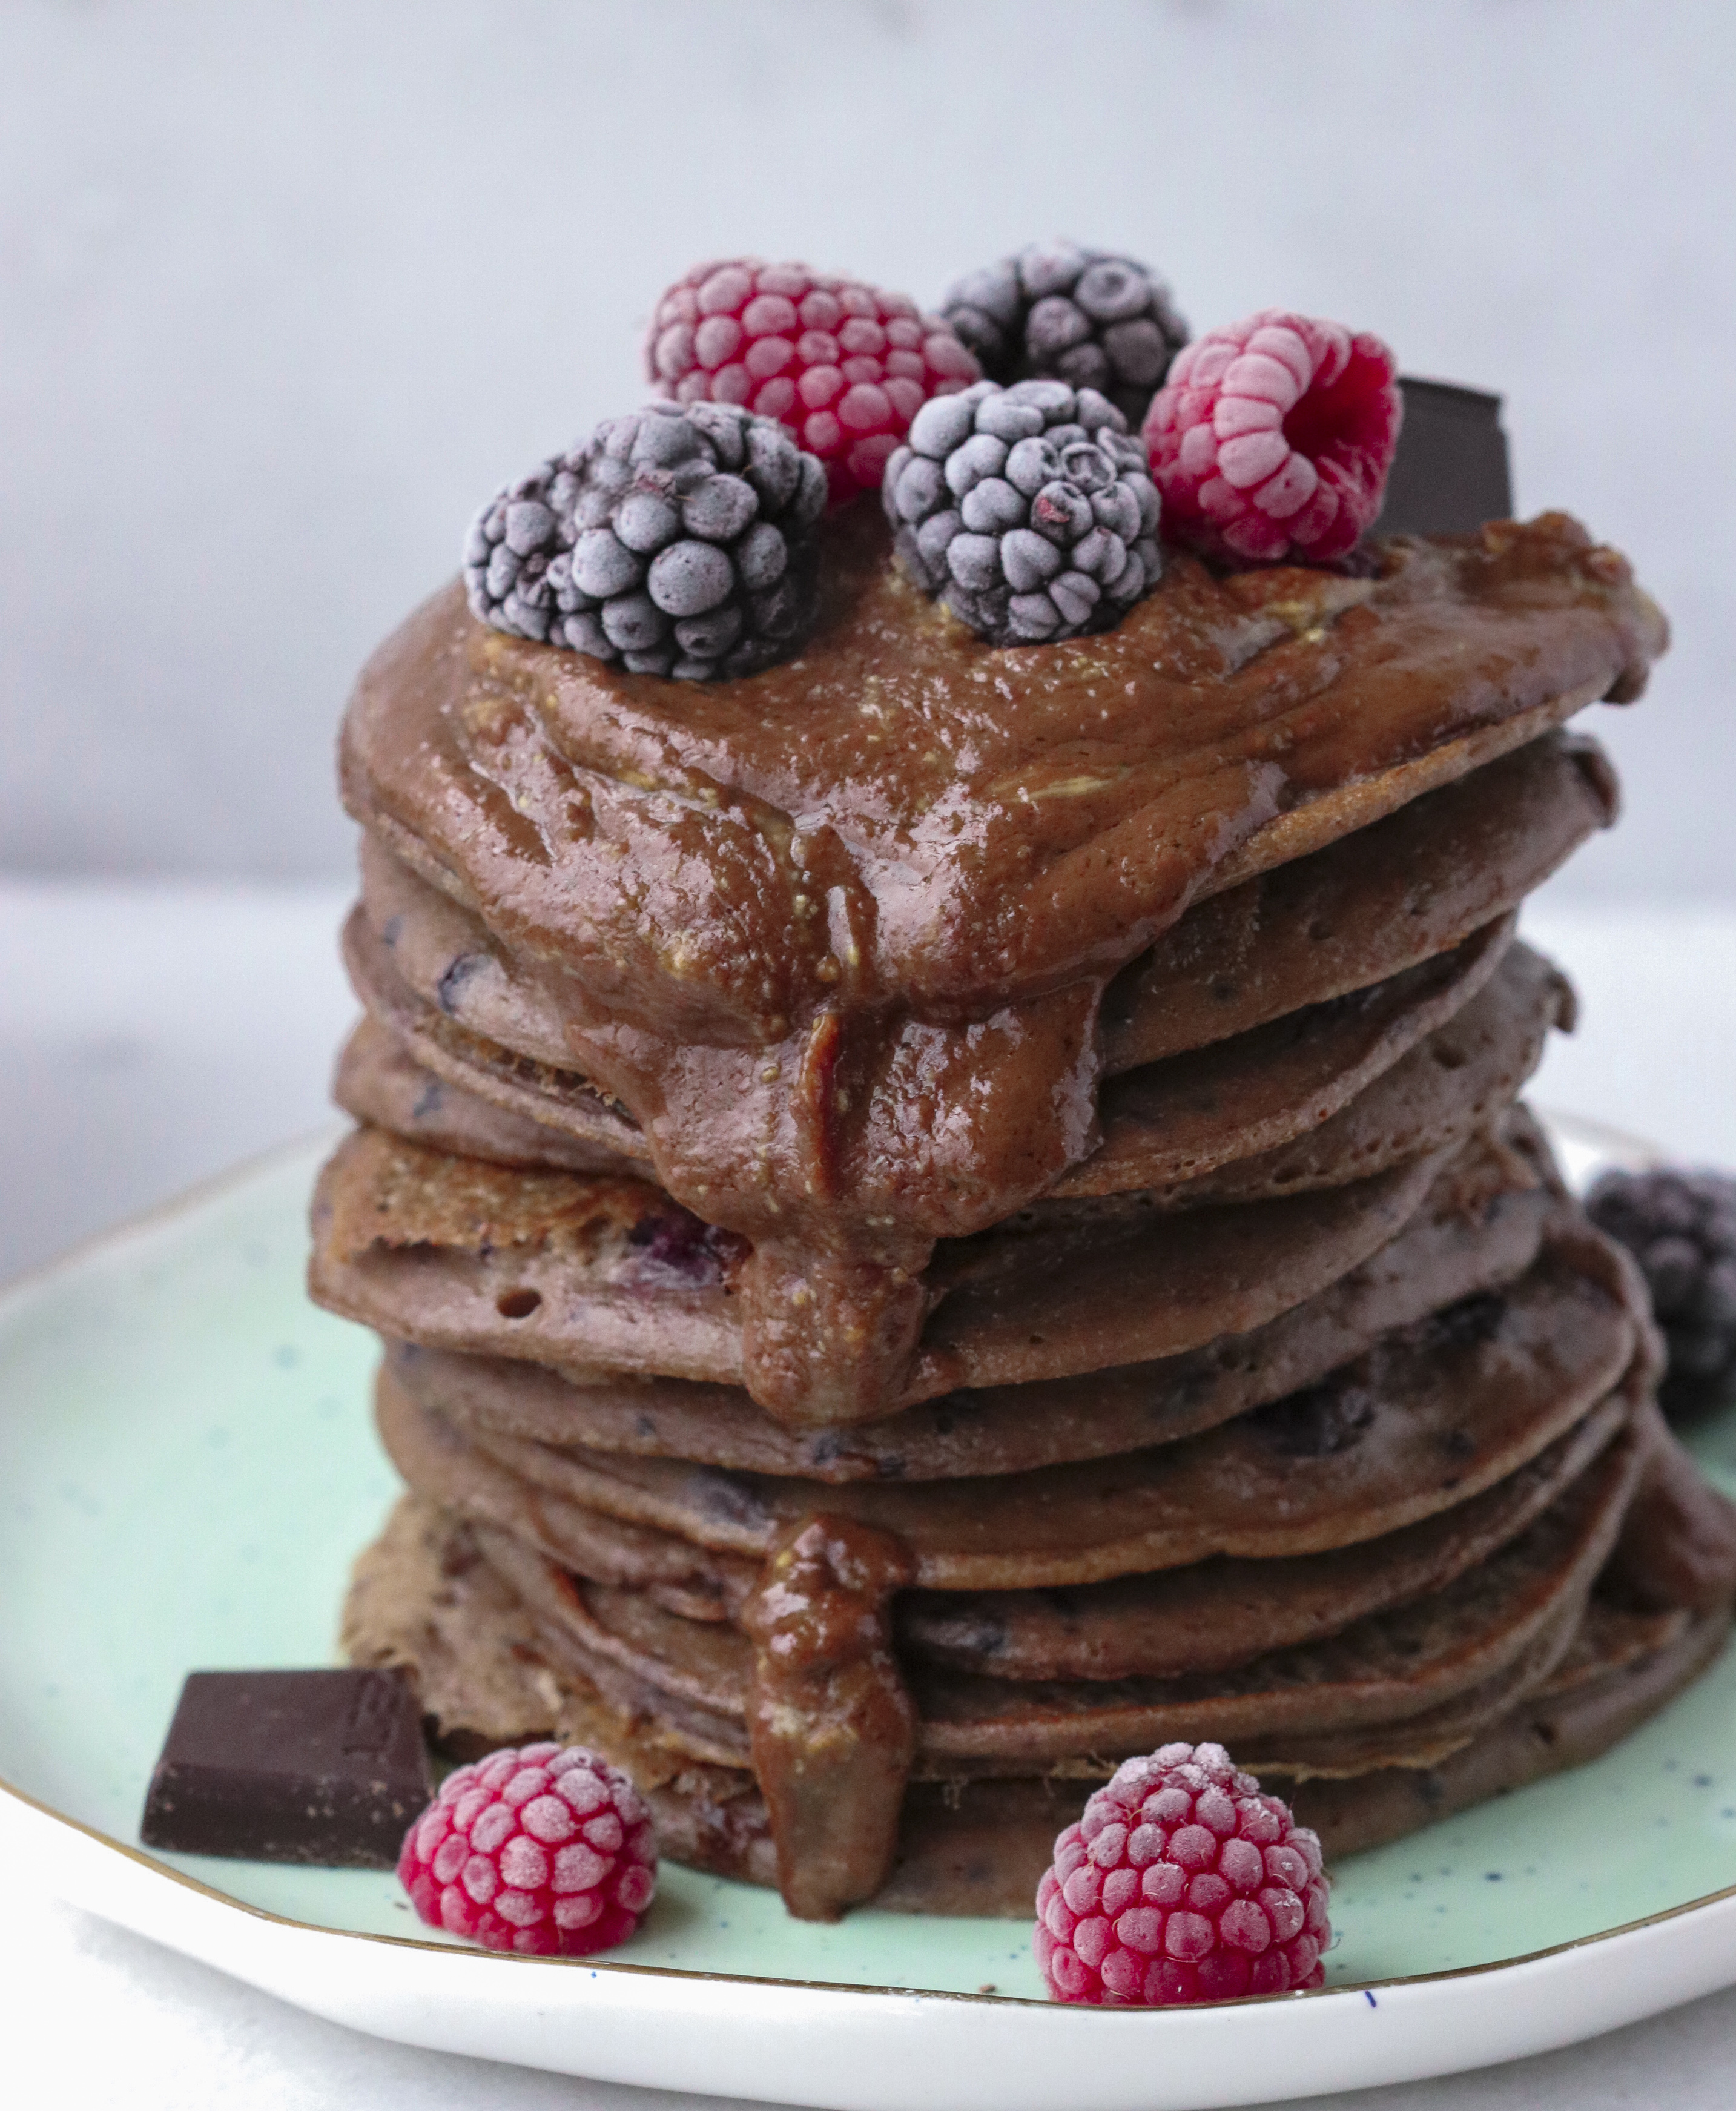 DO Double Chocolate Pancakes